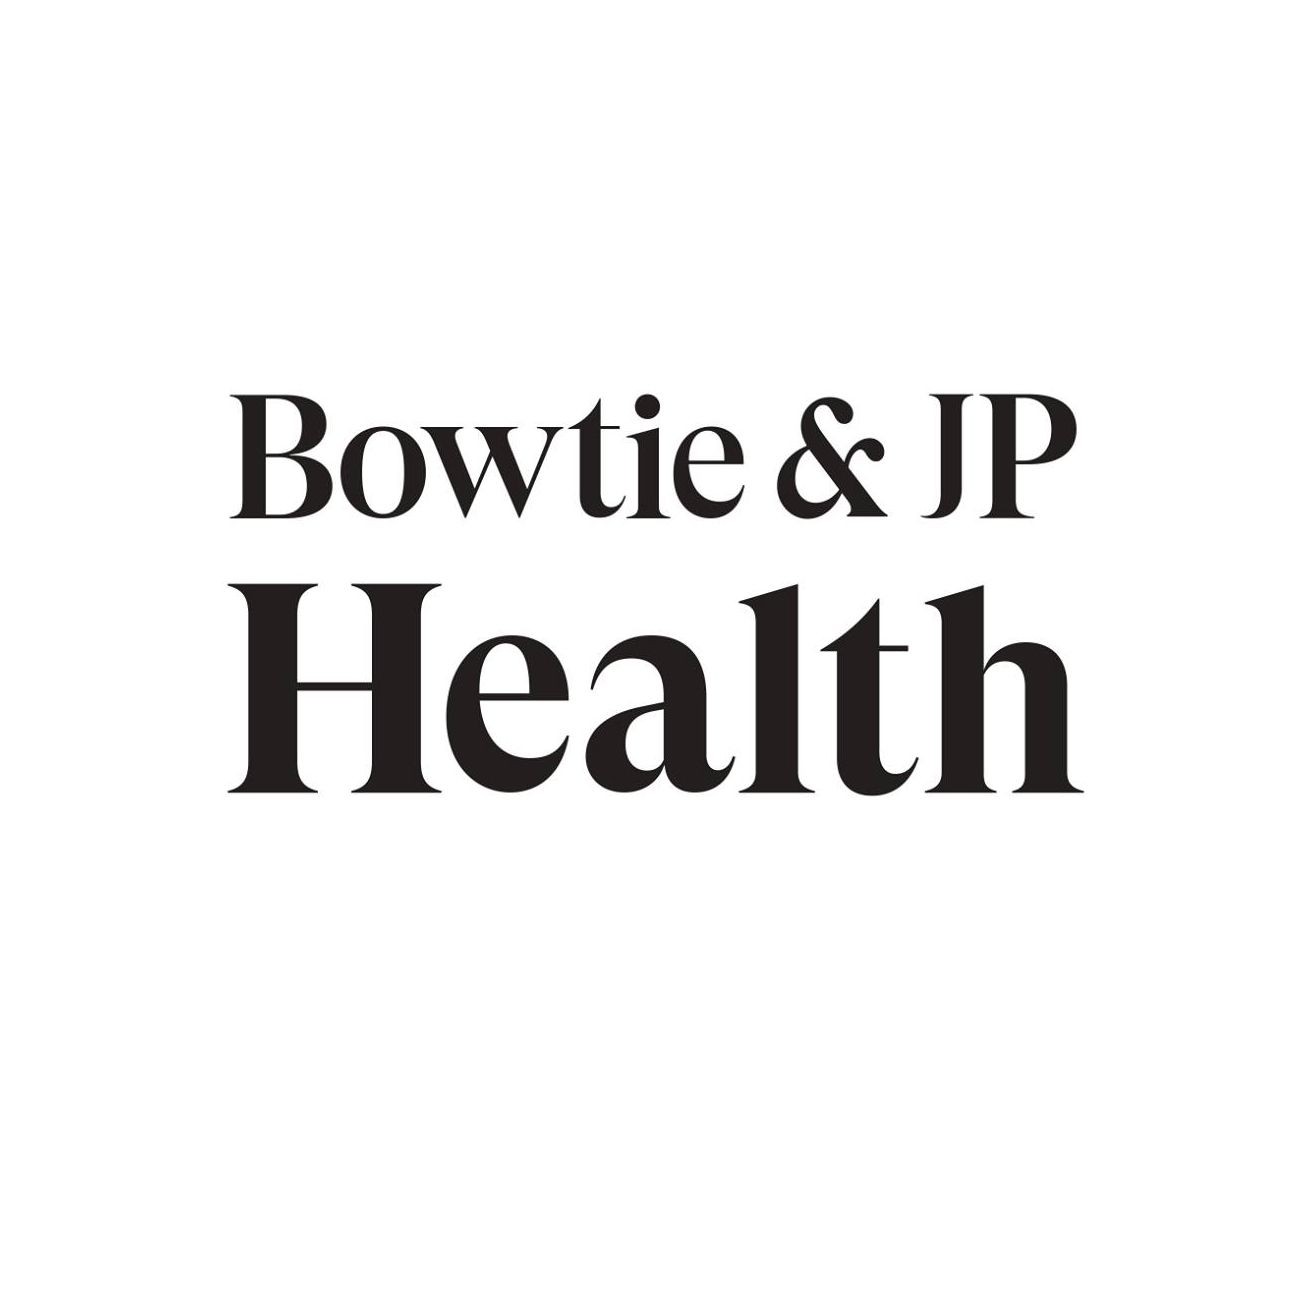 Bowtie & Jp health